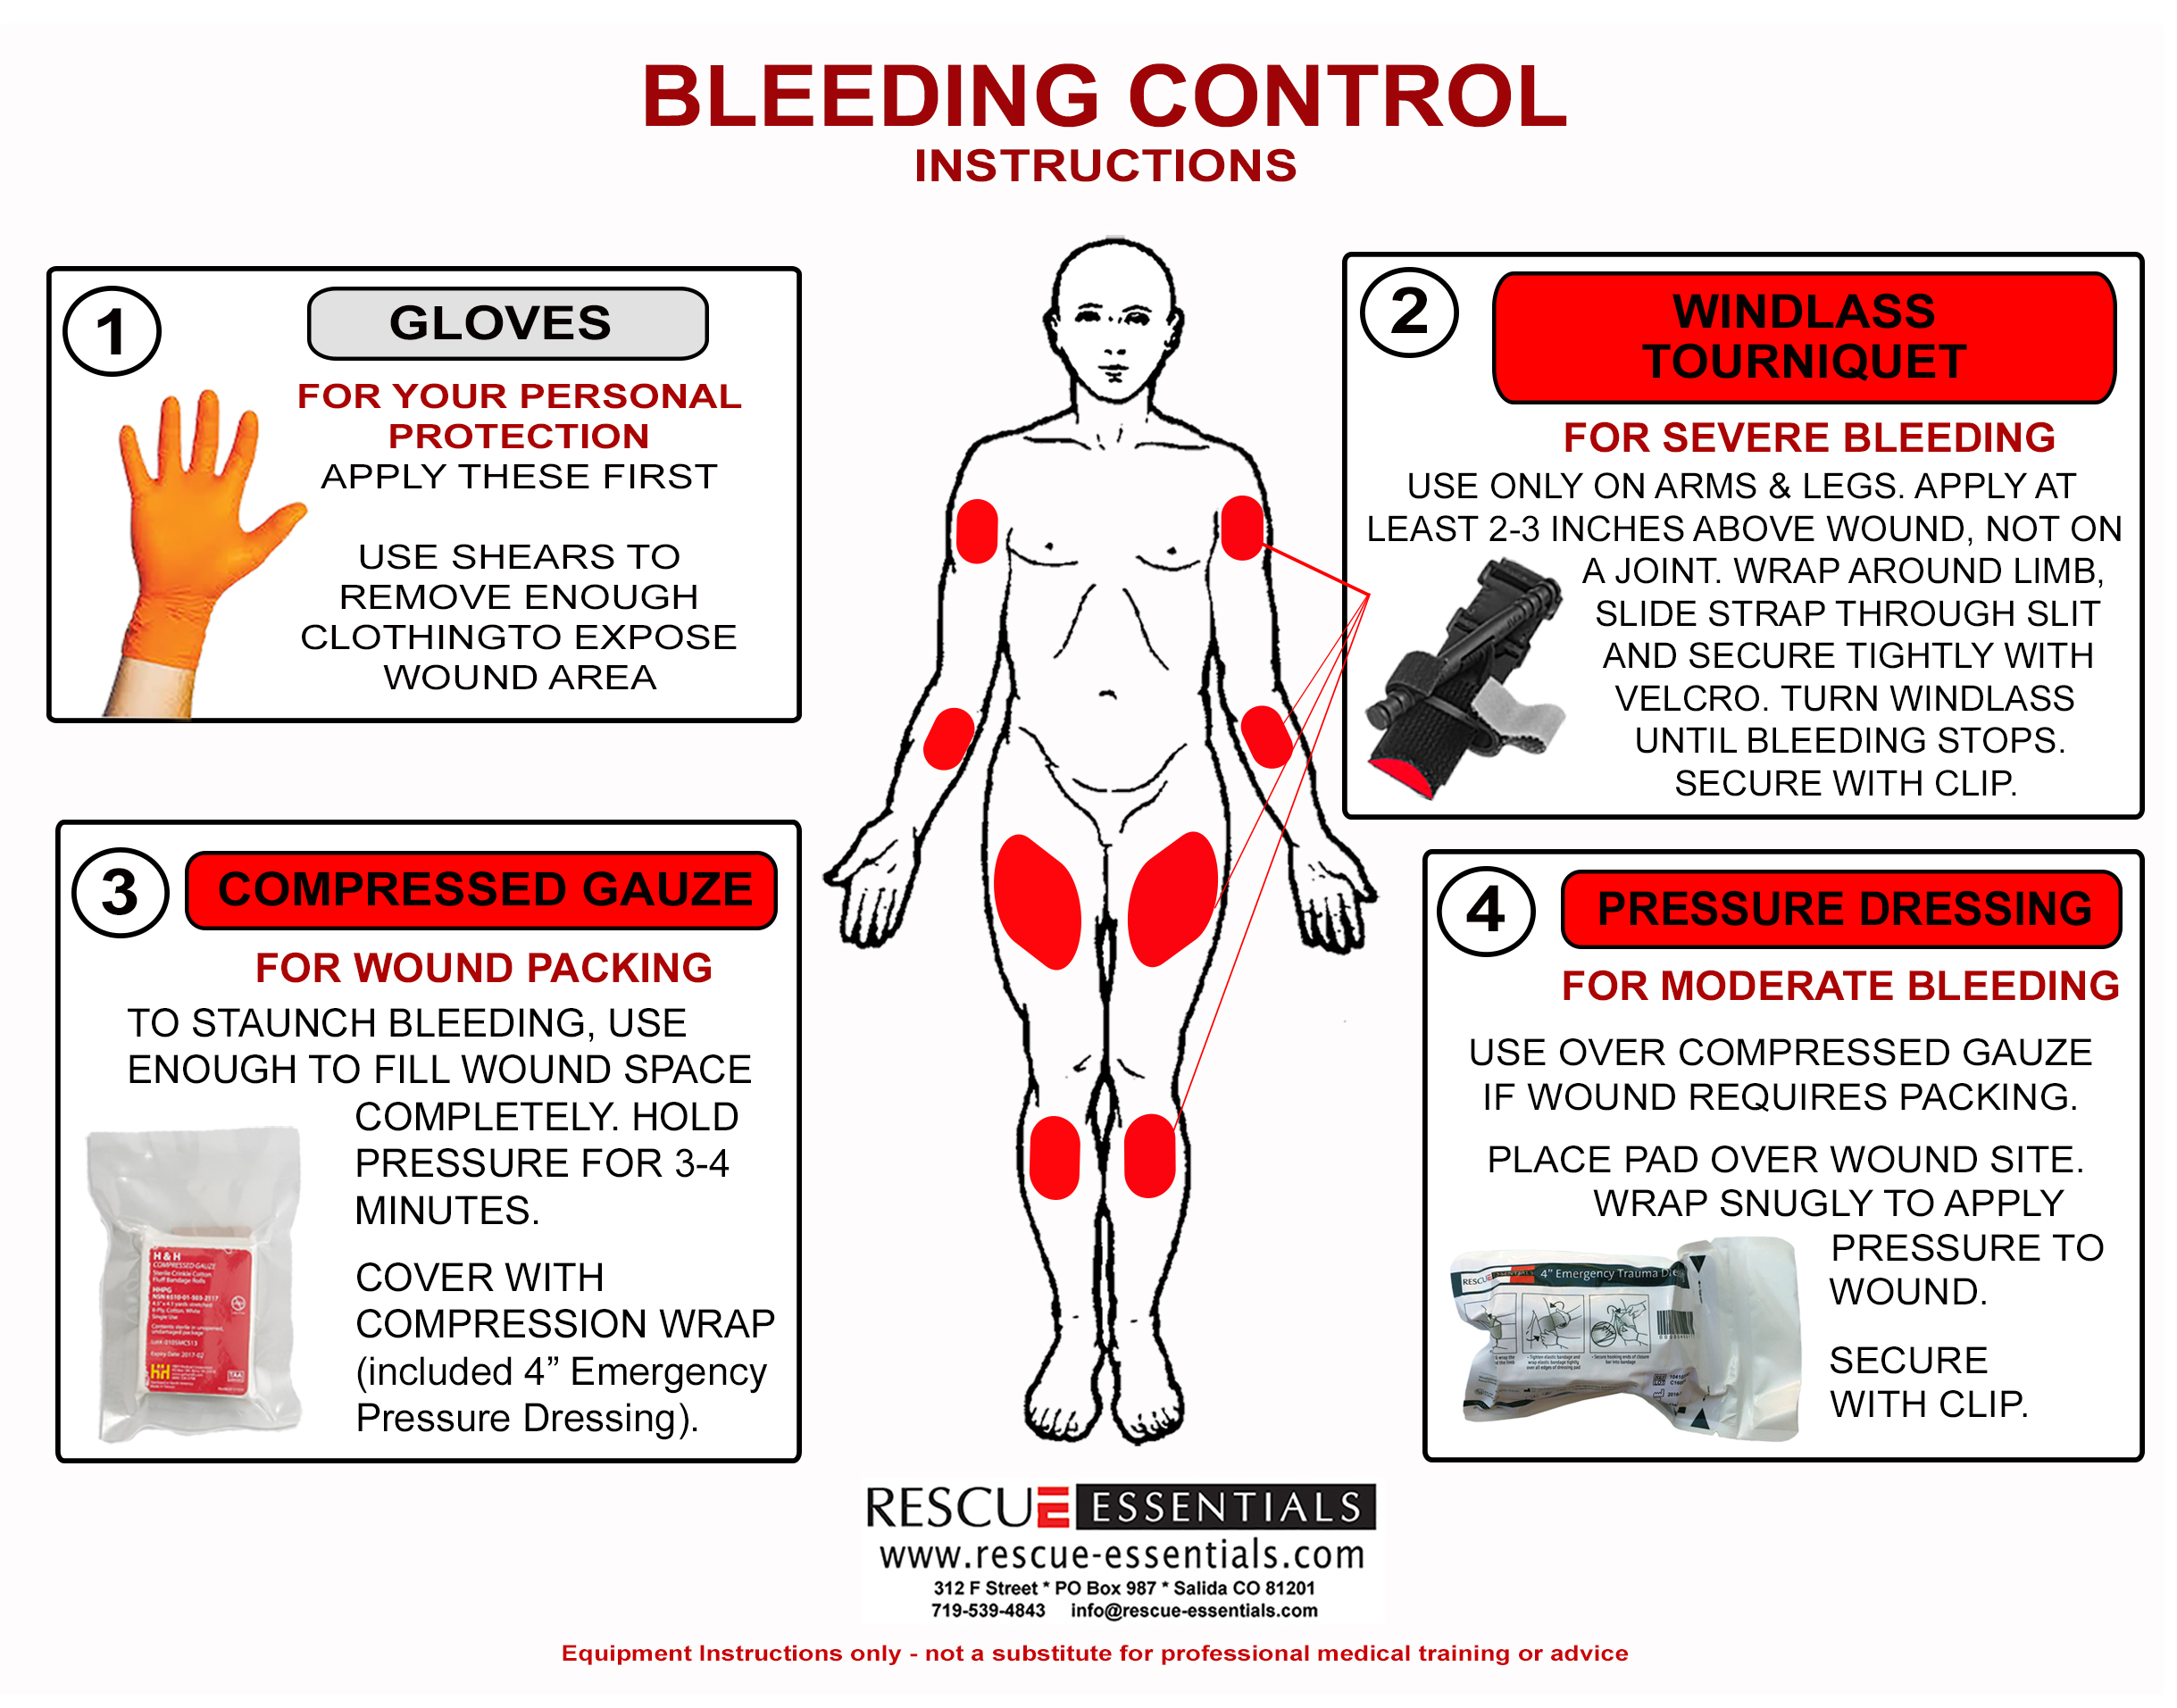 01-0476-bifold-insert-inside-for-bleeding-control-kit-2-30-2400-8w-x-6.25h-unfolded-with-.125-bleed-300-dpi-updated.jpg